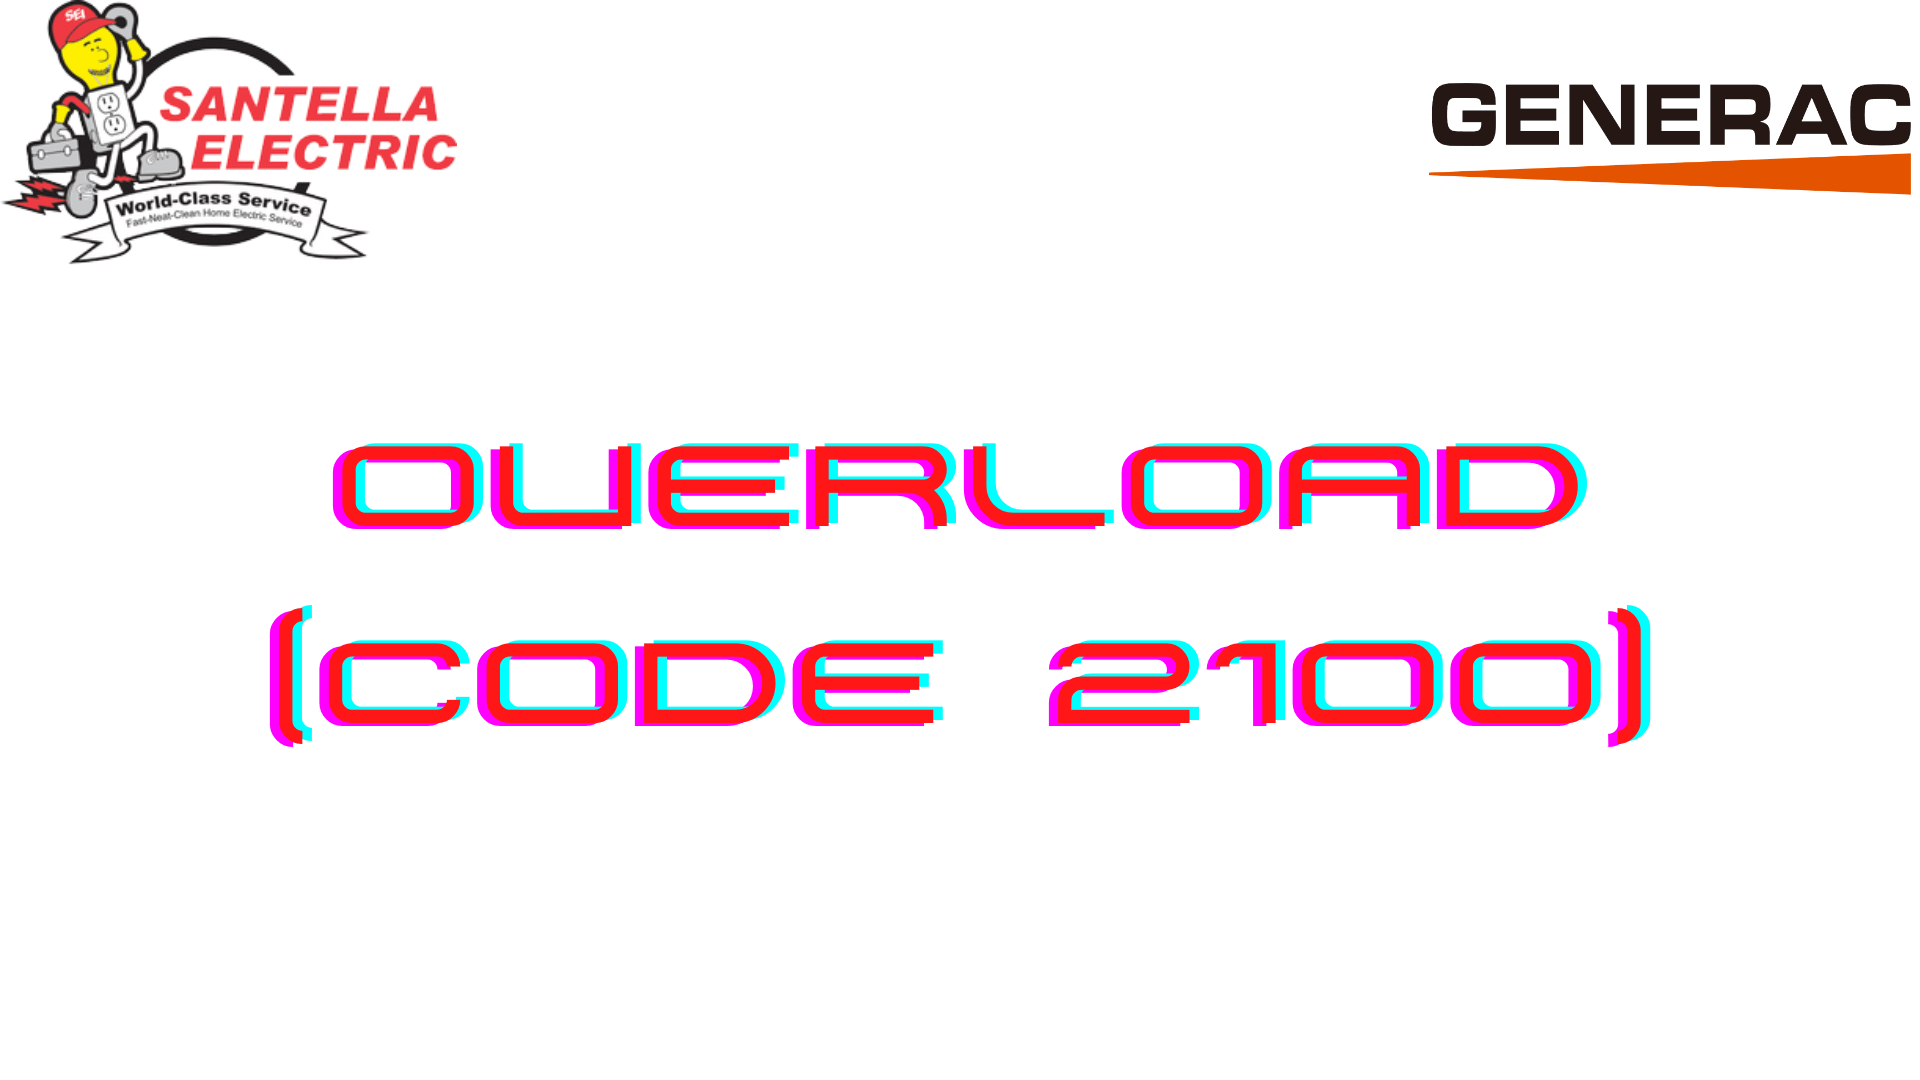 Generac Error Code - Overload (Code 2100)